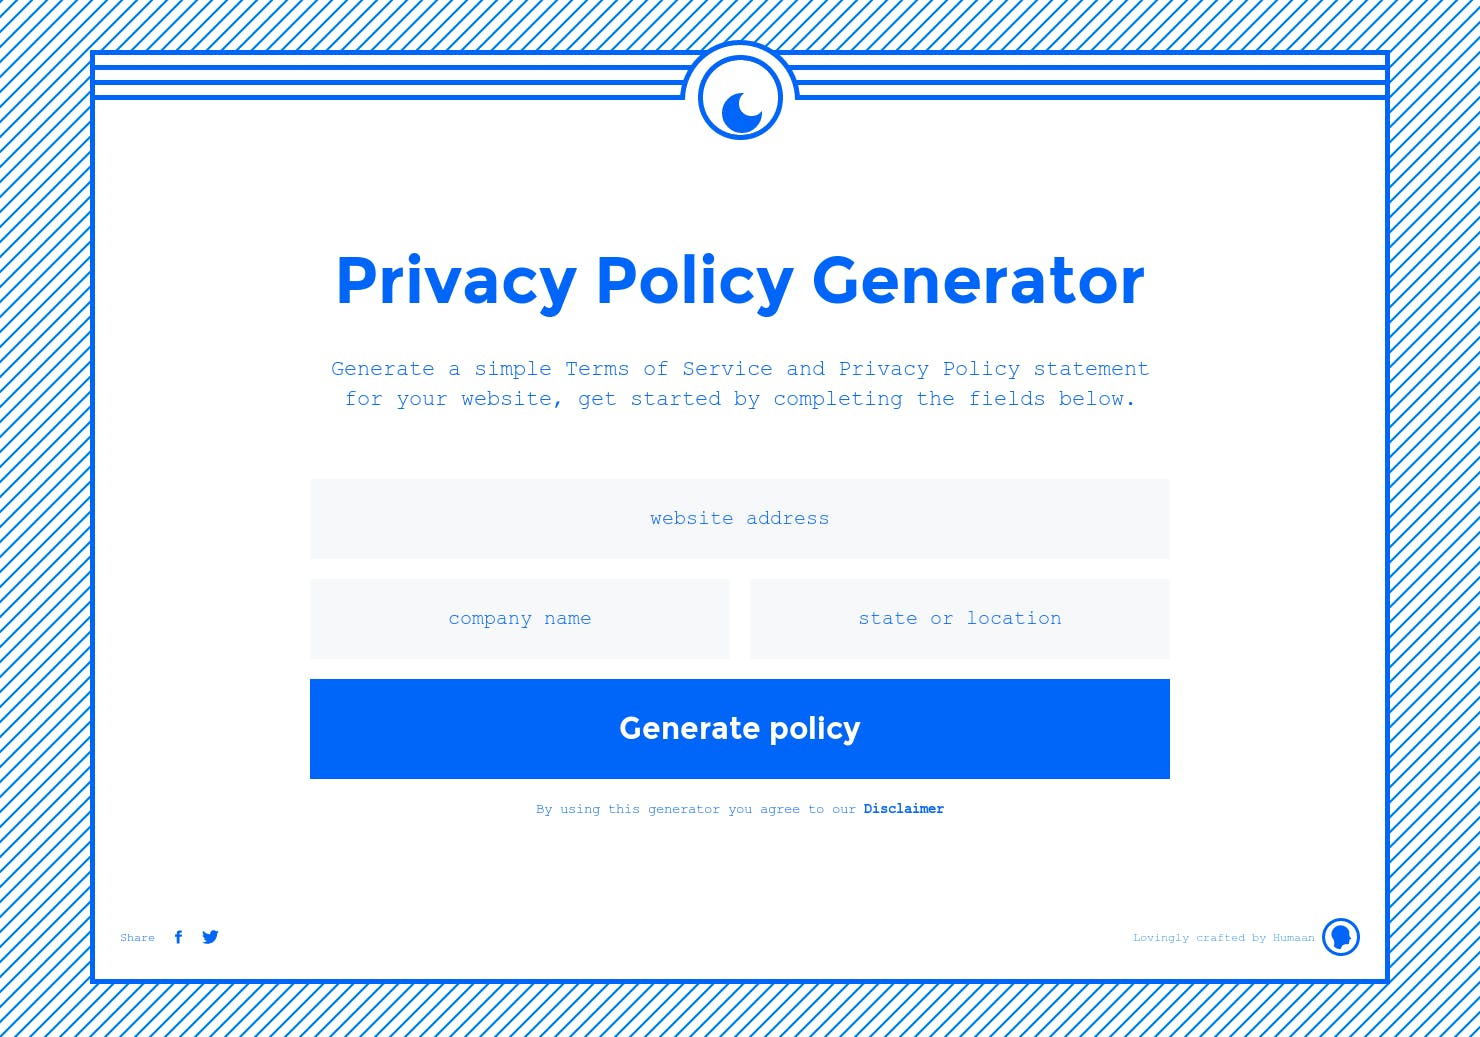 Privacy Policy Generator media 1